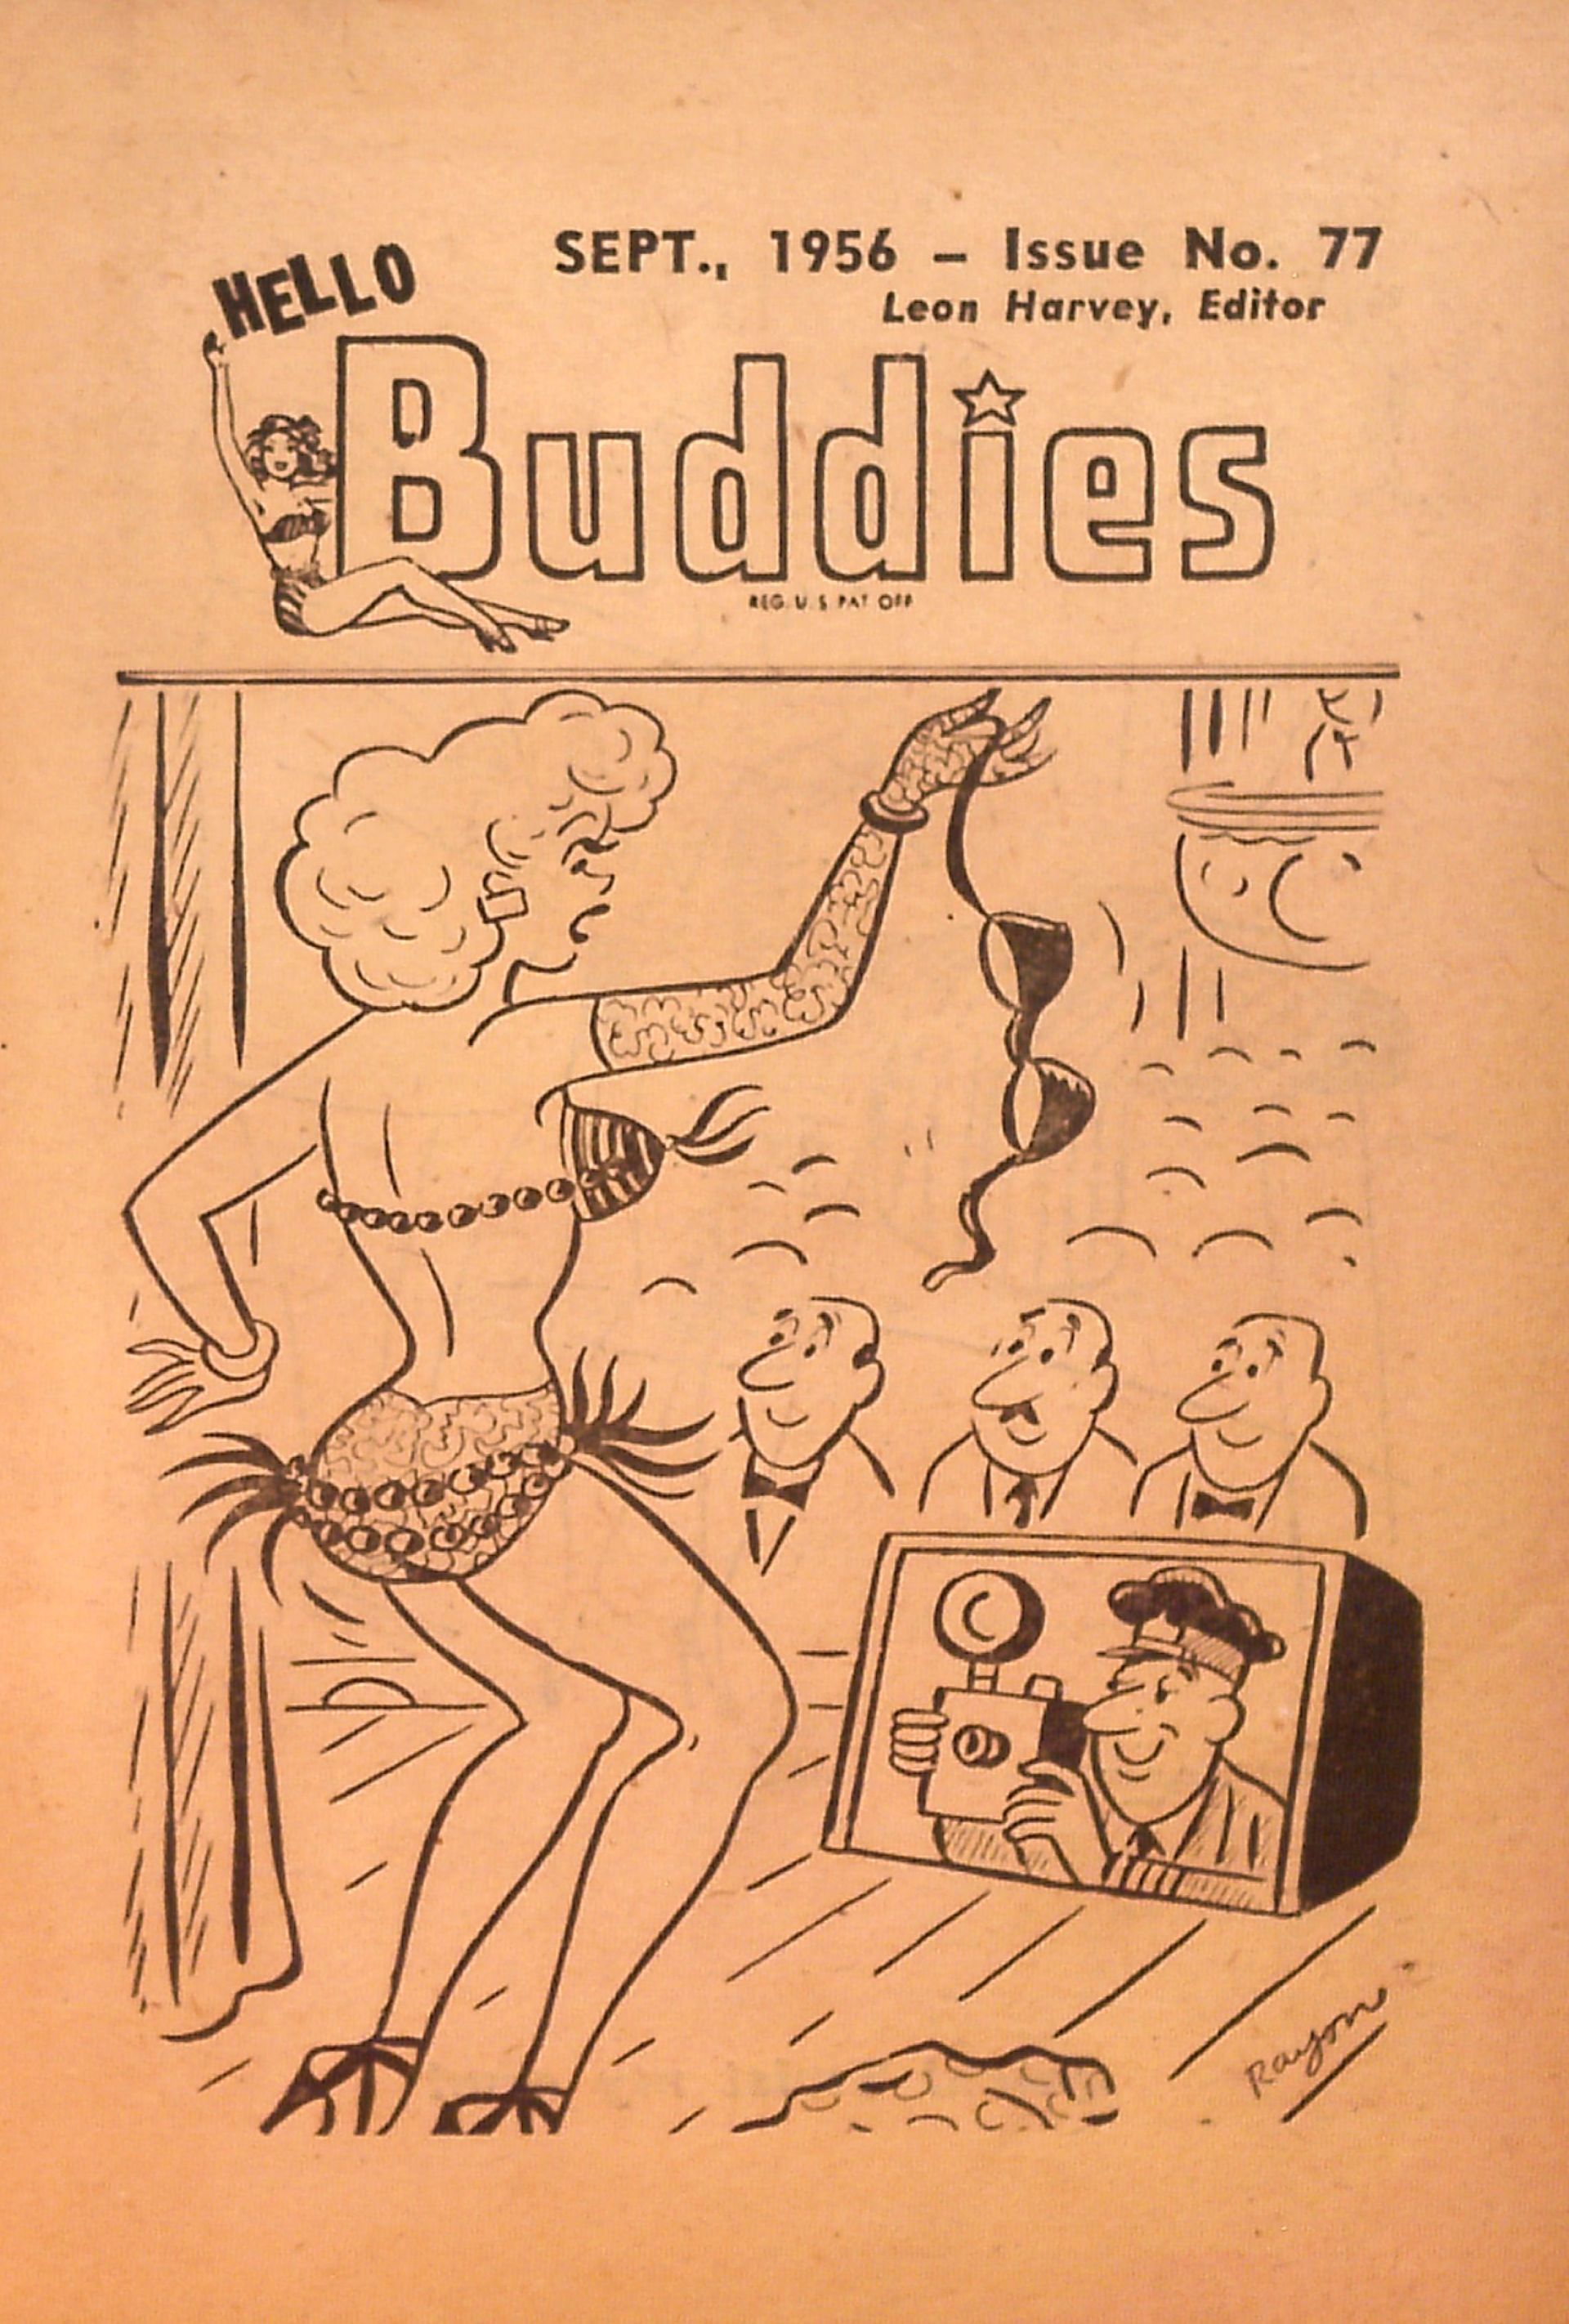 Read online Hello Buddies comic -  Issue #77 - 3